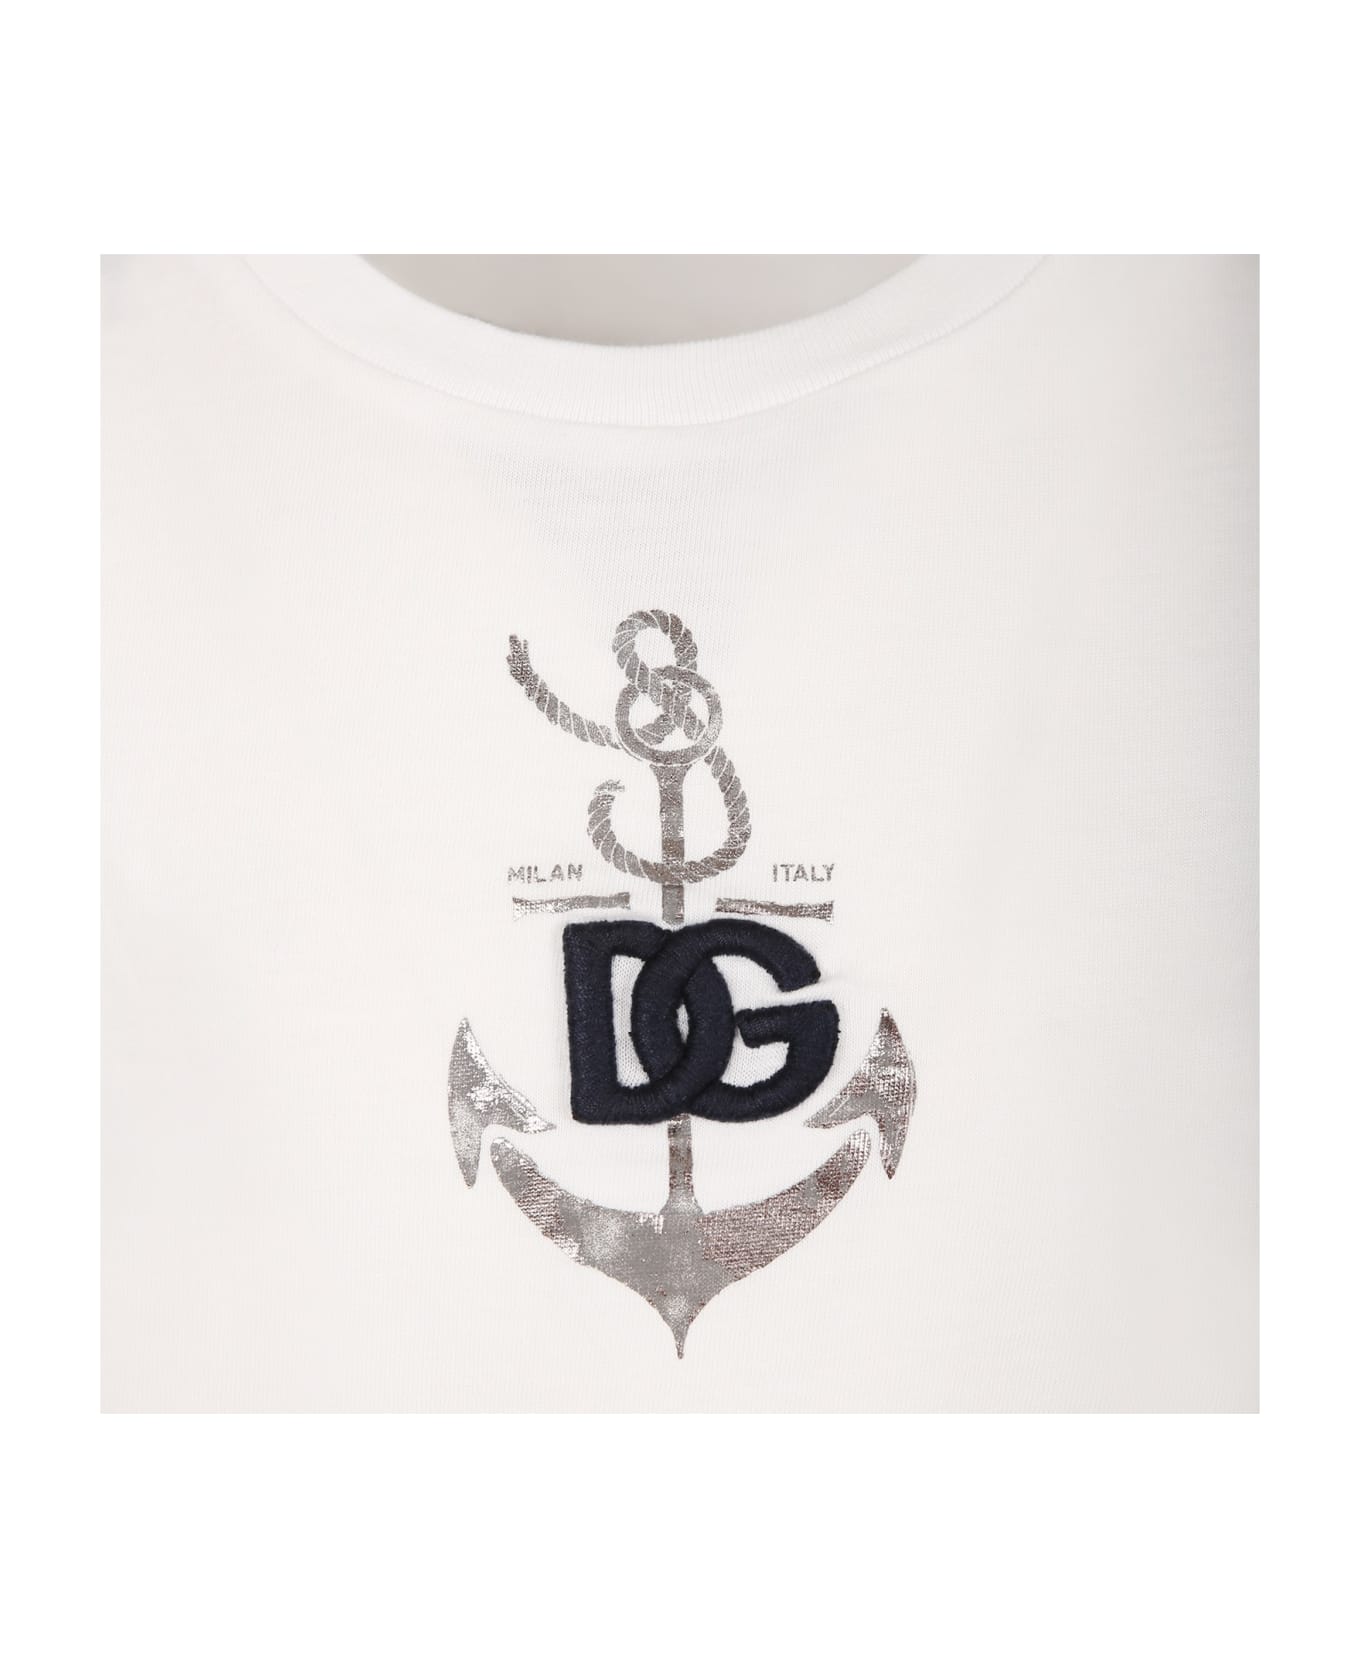 Dolce & Gabbana Whit T-shirt Shorts For Boy With Iconic Monogram